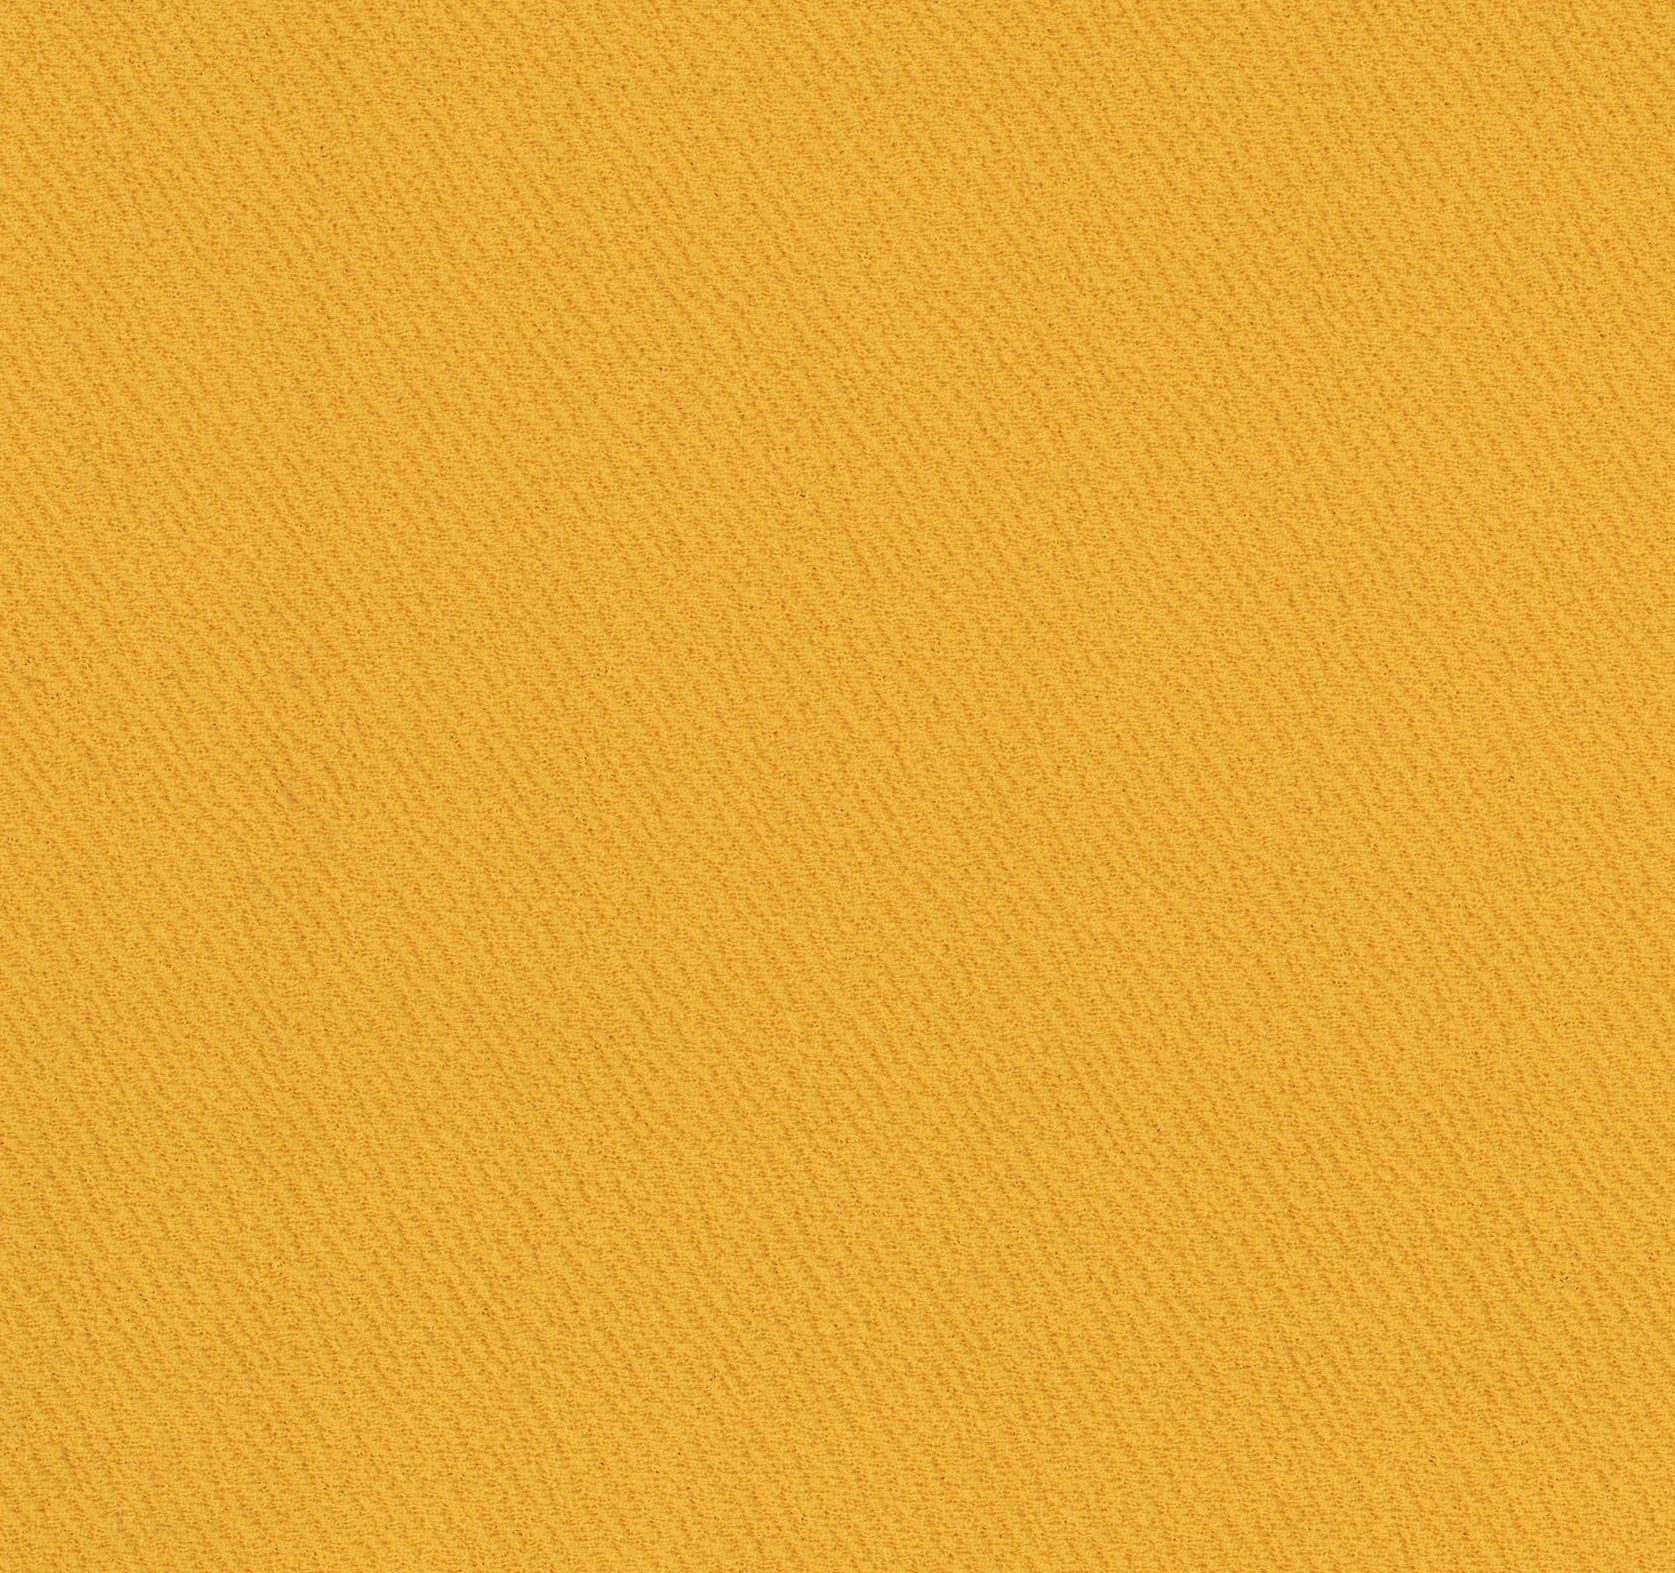 13018-04 Golden Rod Riverpool Jacquard Plain Dyed Blend 260g/yd 58" blend jacquard knit plain dyed polyester spandex yellow Solid Color, Jacquard - knit fabric - woven fabric - fabric company - fabric wholesale - fabric b2b - fabric factory - high quality fabric - hong kong fabric - fabric hk - acetate fabric - cotton fabric - linen fabric - metallic fabric - nylon fabric - polyester fabric - spandex fabric - chun wing hing - cwh hk - fabric worldwide ship - 針織布 - 梳織布 - 布料公司- 布料批發 - 香港布料 - 秦榮興